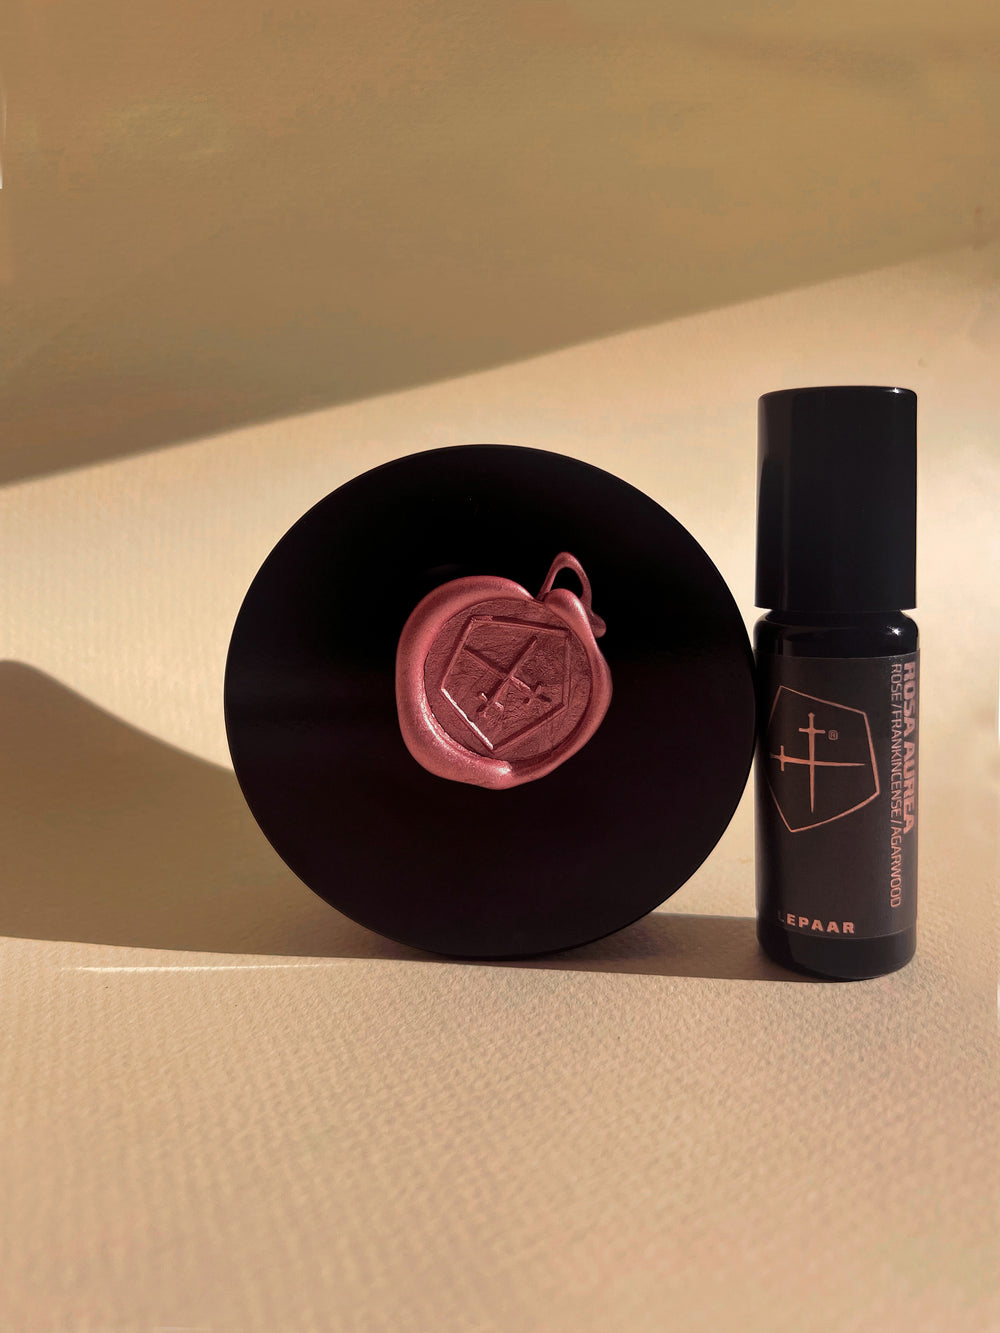 THE PERFUMED ROSE COLLECTION / Damasque Rose Gold Body Balm, Rosa Aurea Perfume Oil + limited edit Damasque Rose Bath Salt